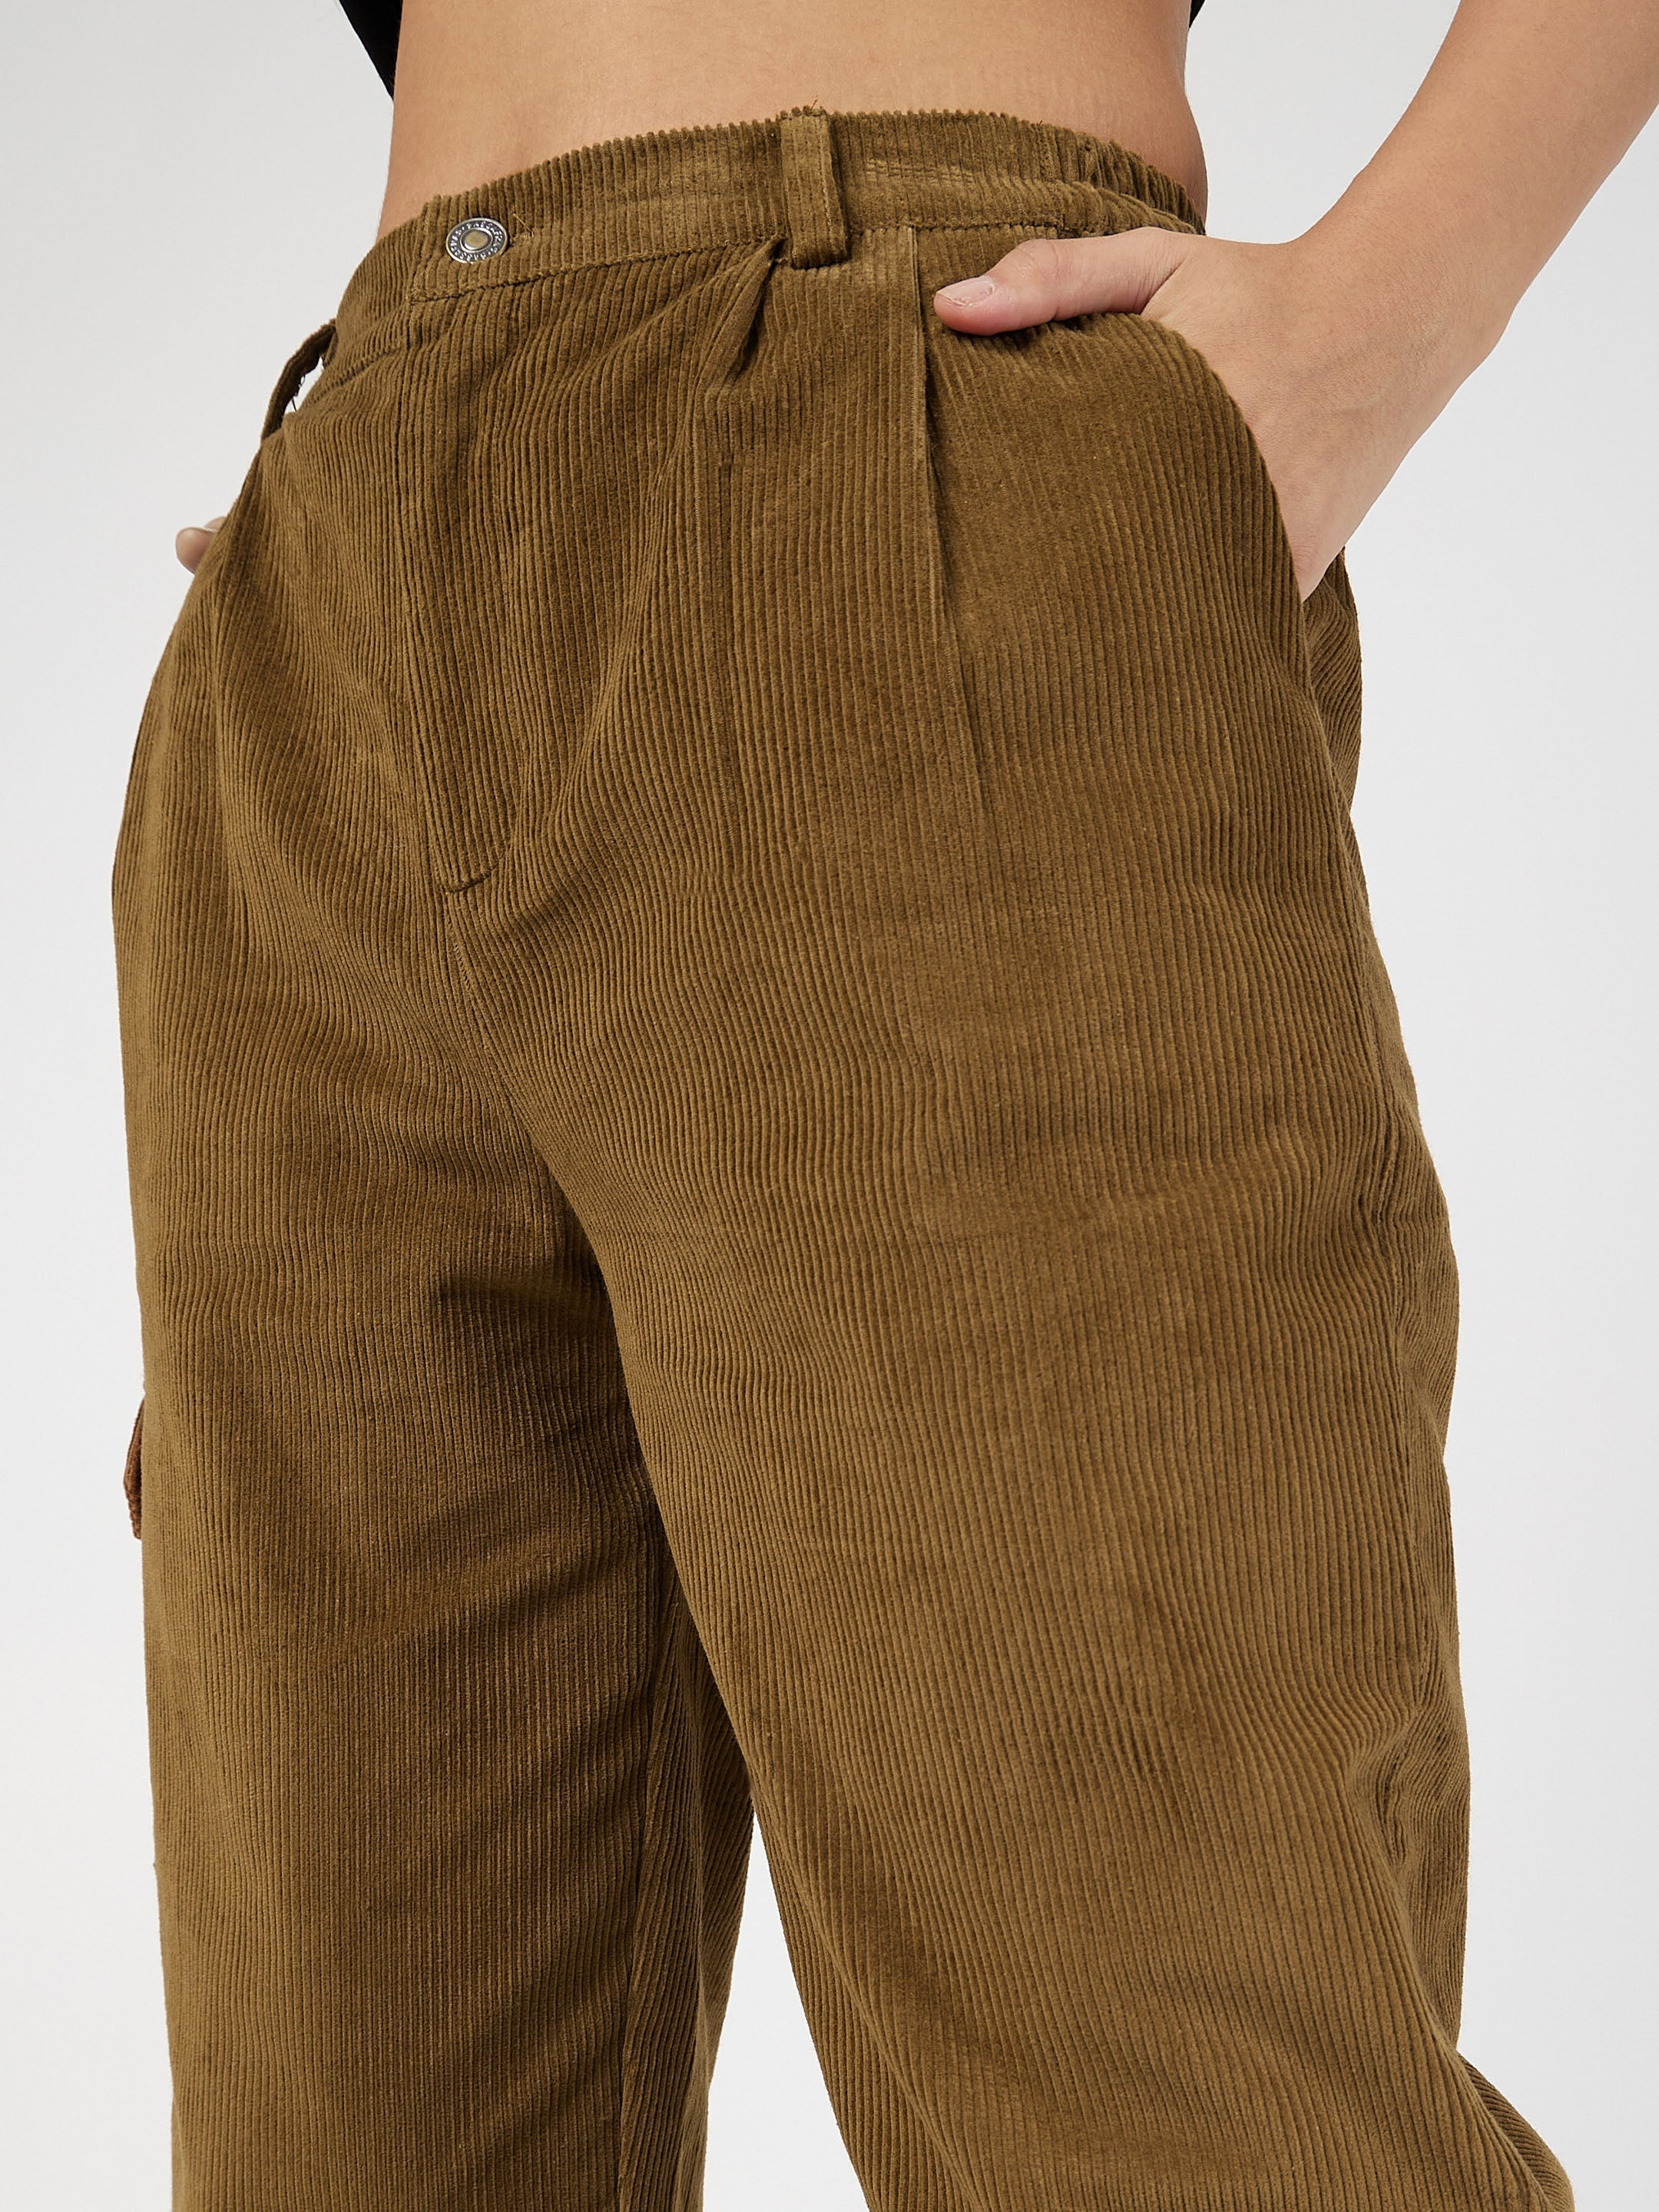 Olalook Pants - Brown - Carrot pants